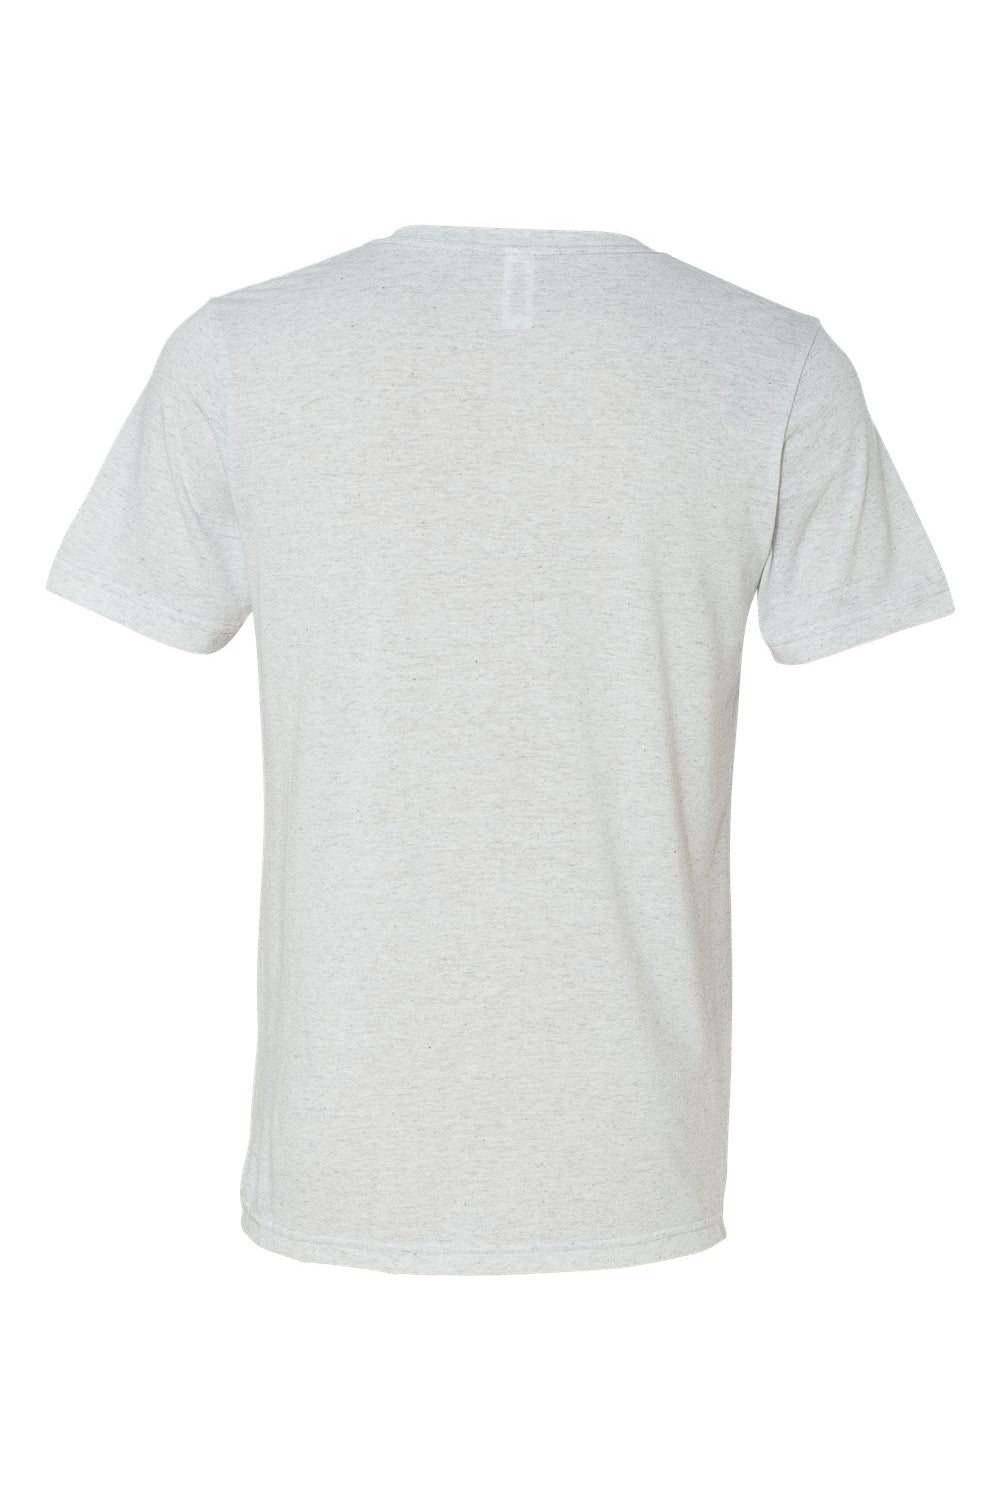 Bella + Canvas BC3415/3415C/3415 Mens Short Sleeve V-Neck T-Shirt White Fleck Flat Back